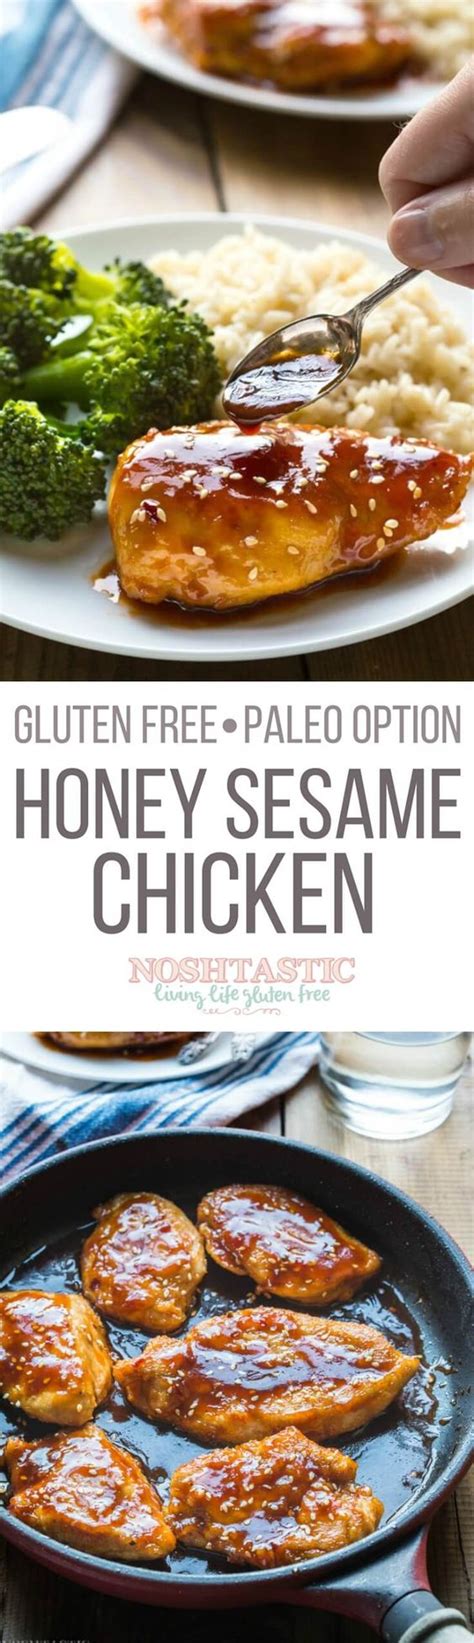 Gluten Free Sesame Chicken With Honey Recipe Healthy Recipes Recipes